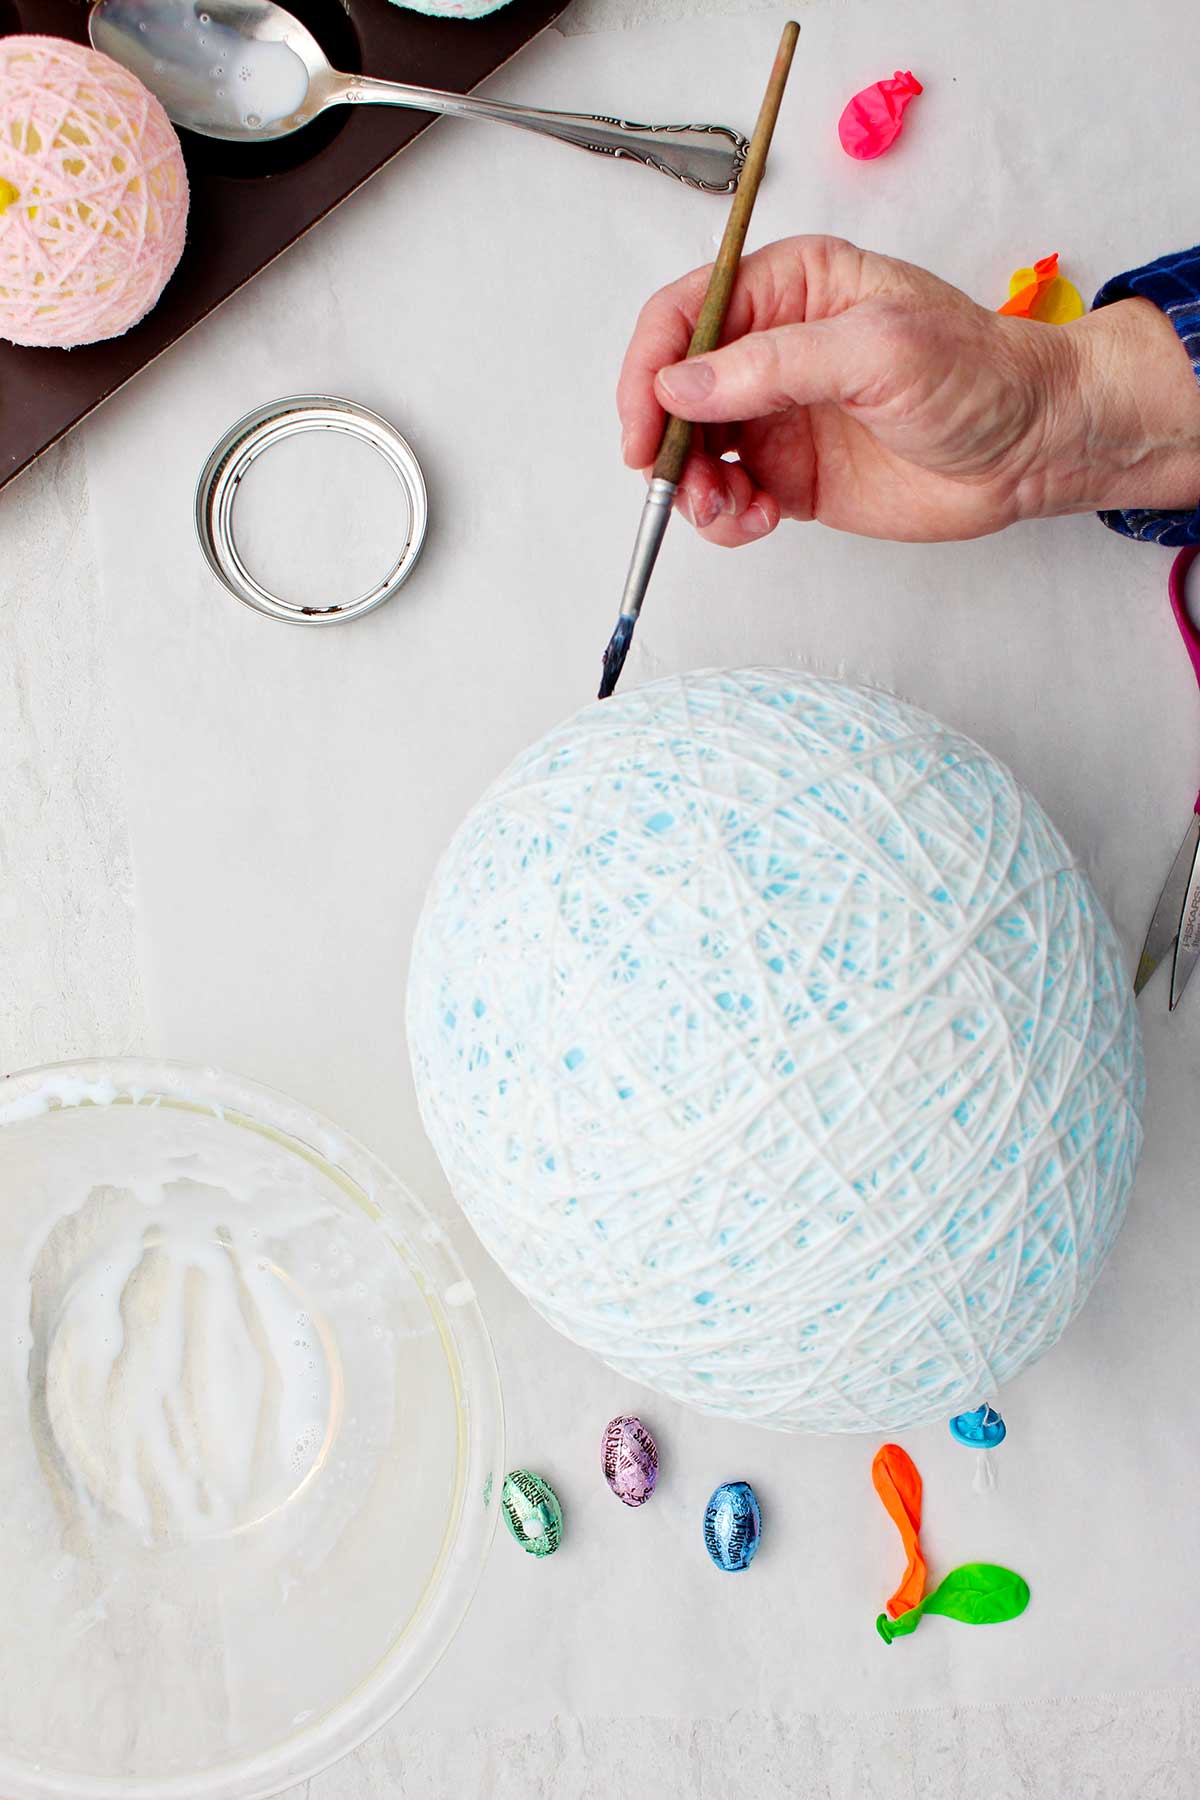 Hand painting white glue on string egg around blue balloon.